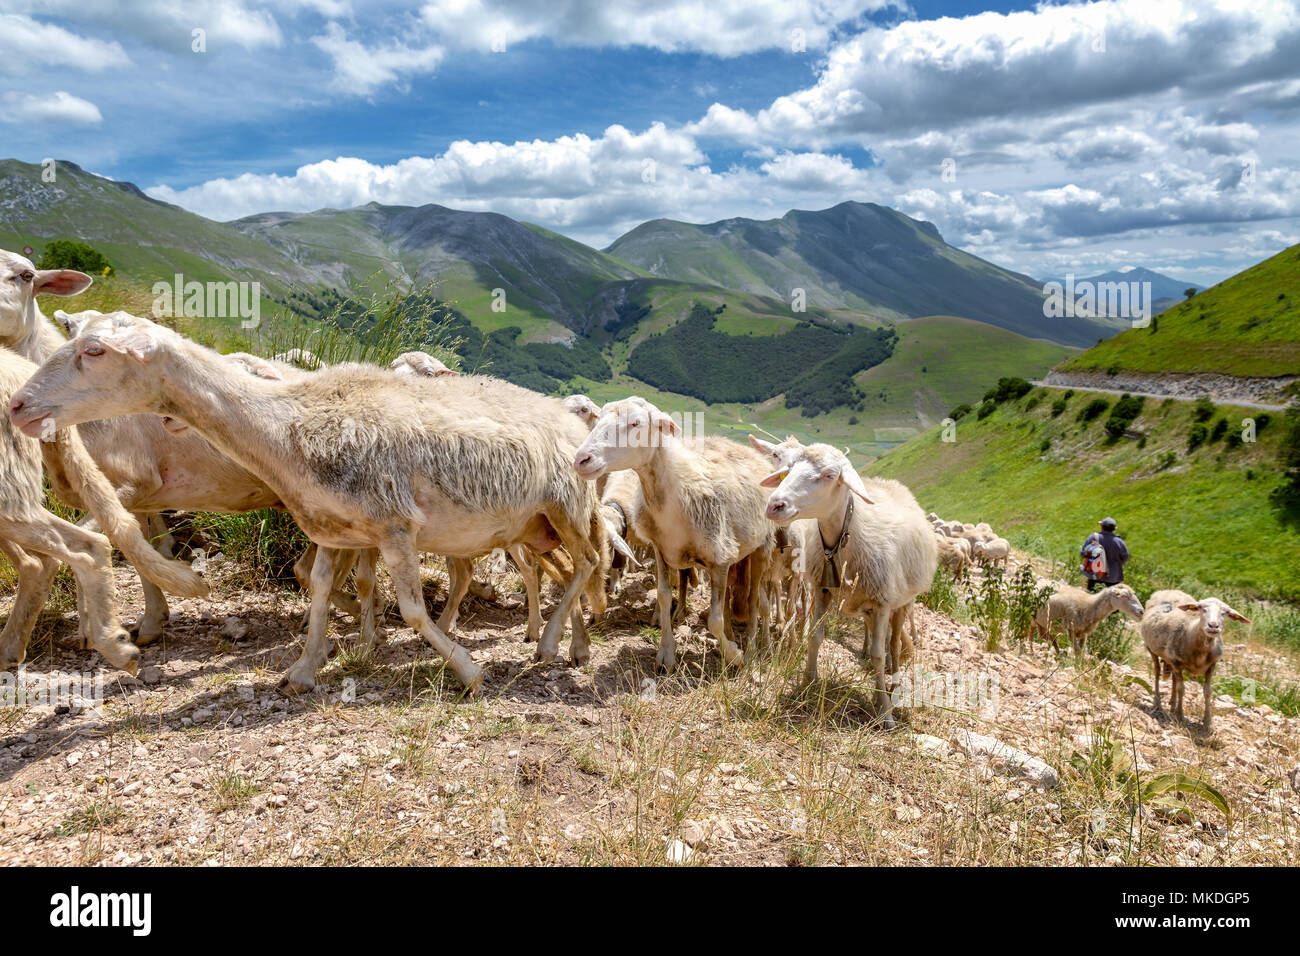 Sheep, Piano Grande, Monti Sibillini National Park, Umbria, Italy Stock Photo